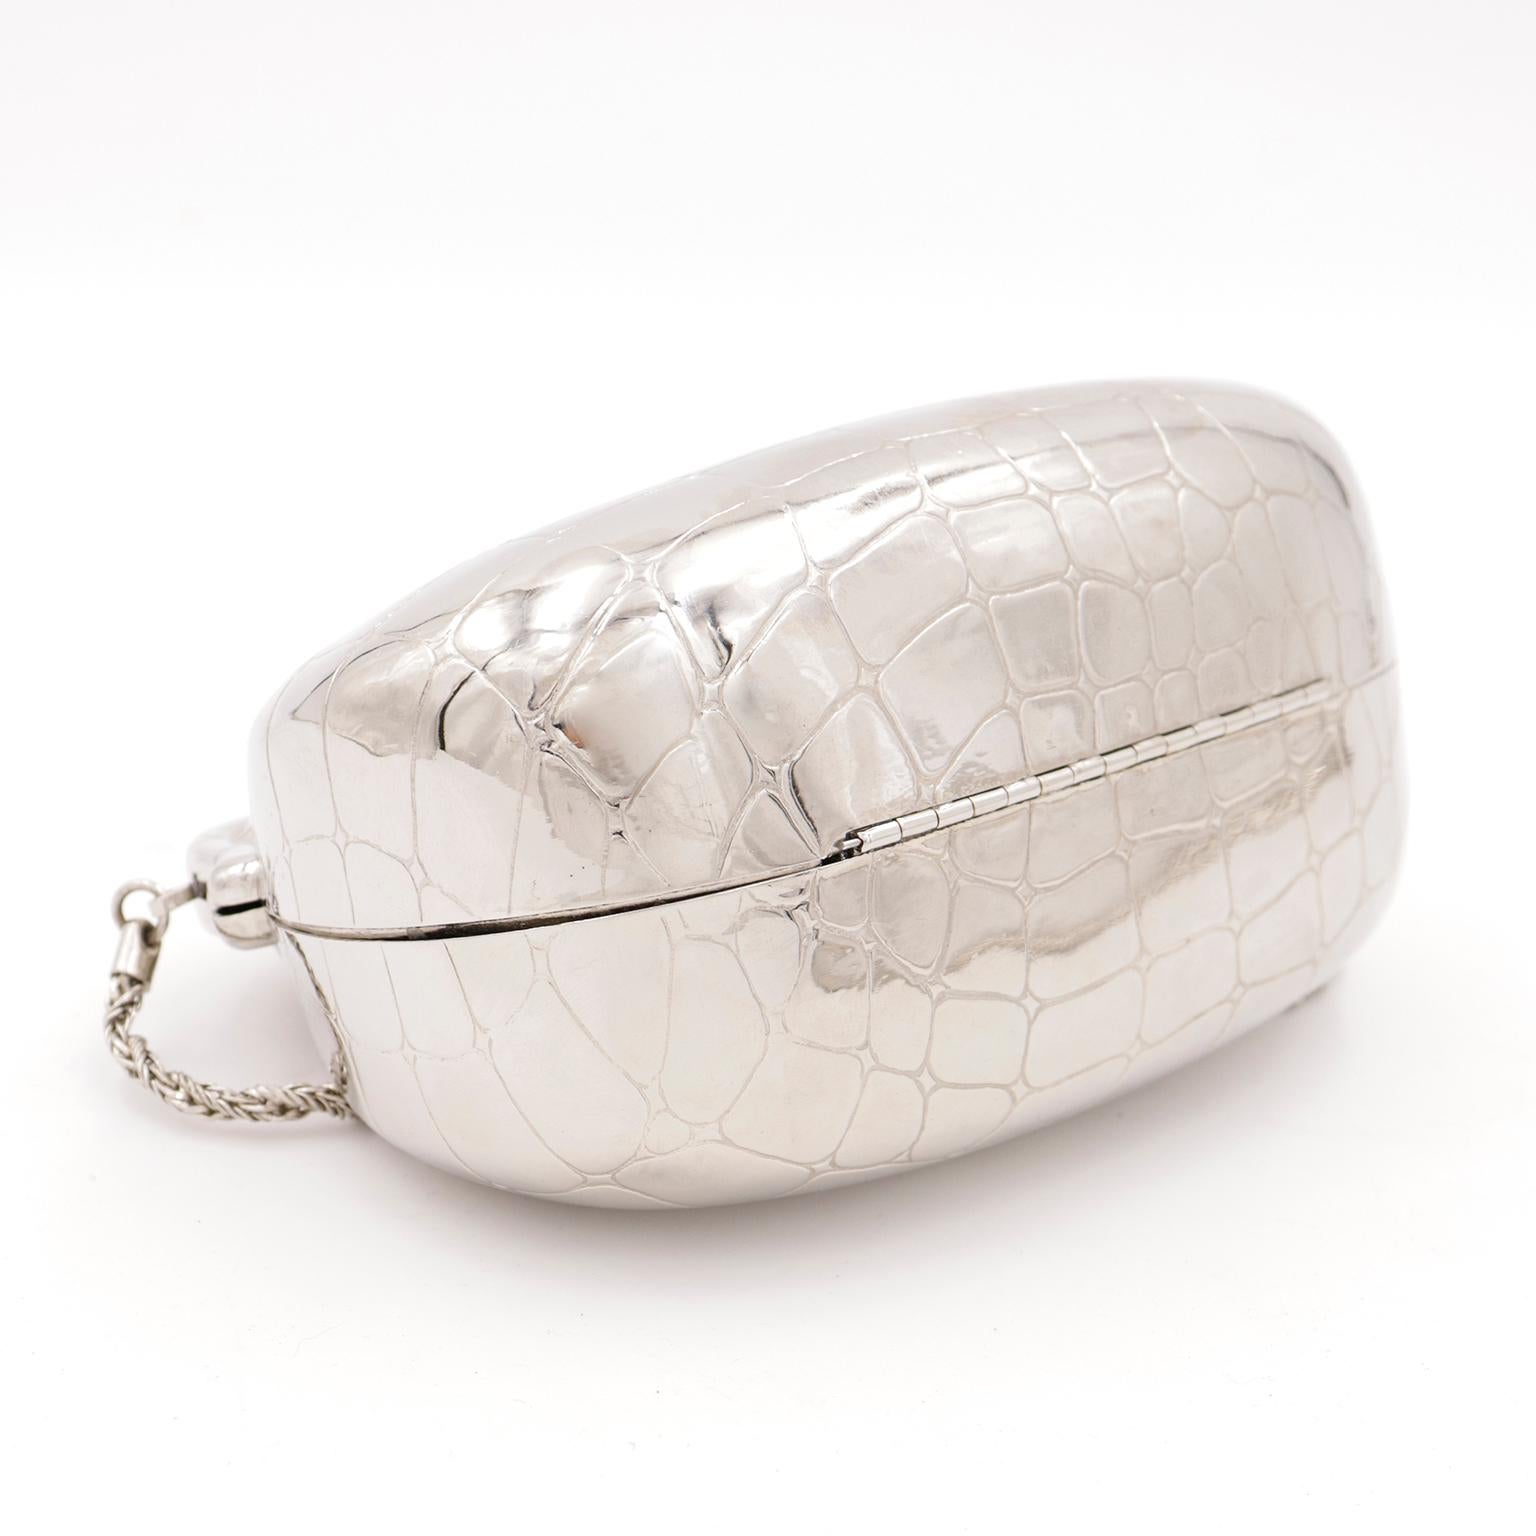 Women's Vintage Silver Hard Case Alligator Embossed Kiss Lock Evening Bag W Chain Strap